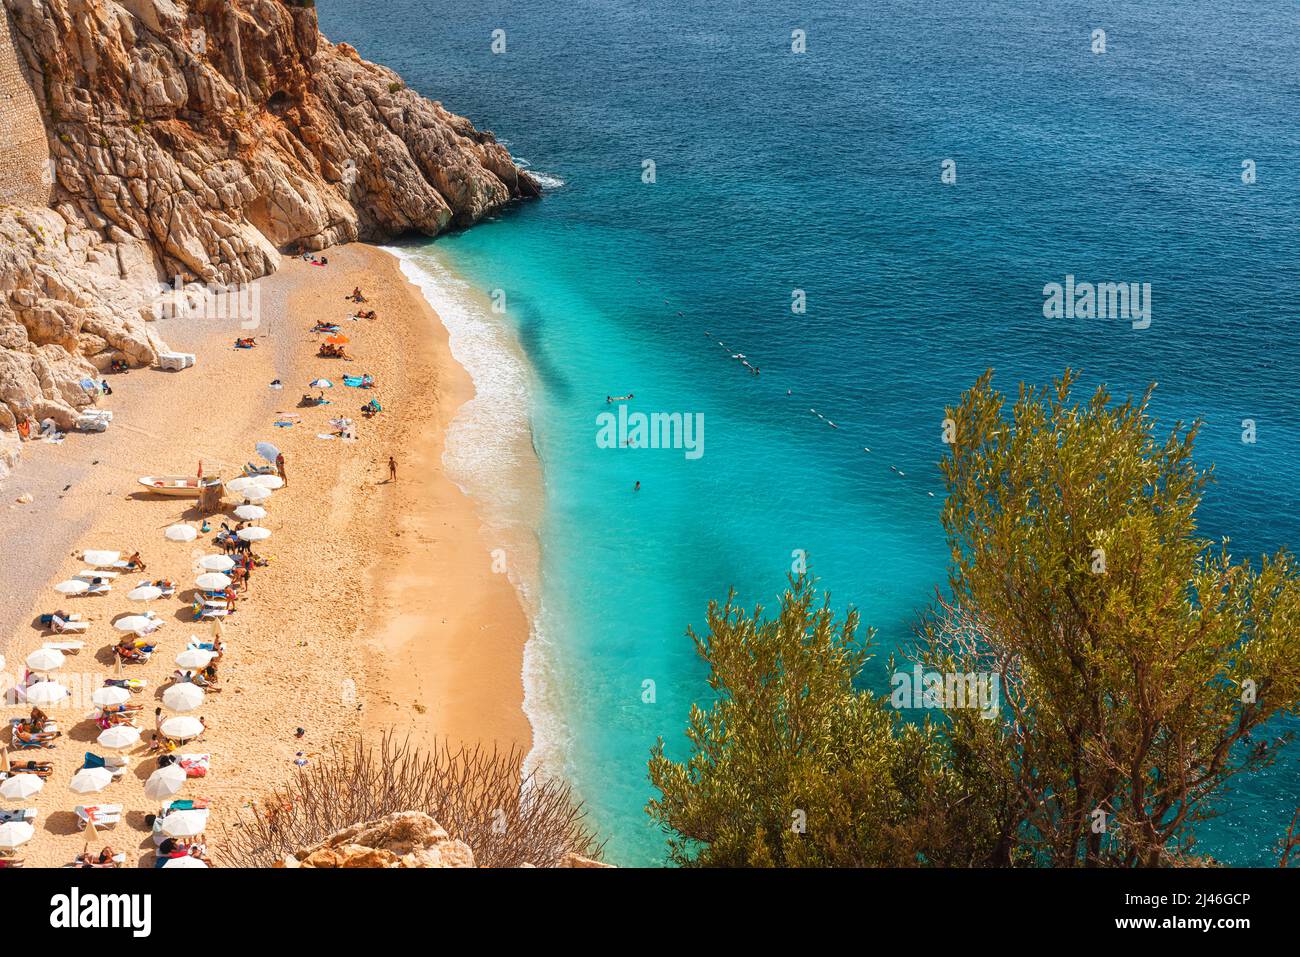 Kaputas sandy beach with blue water on the coast of Antalya region in Turkey with sun umbrellas on the beach. Travel destination Stock Photo